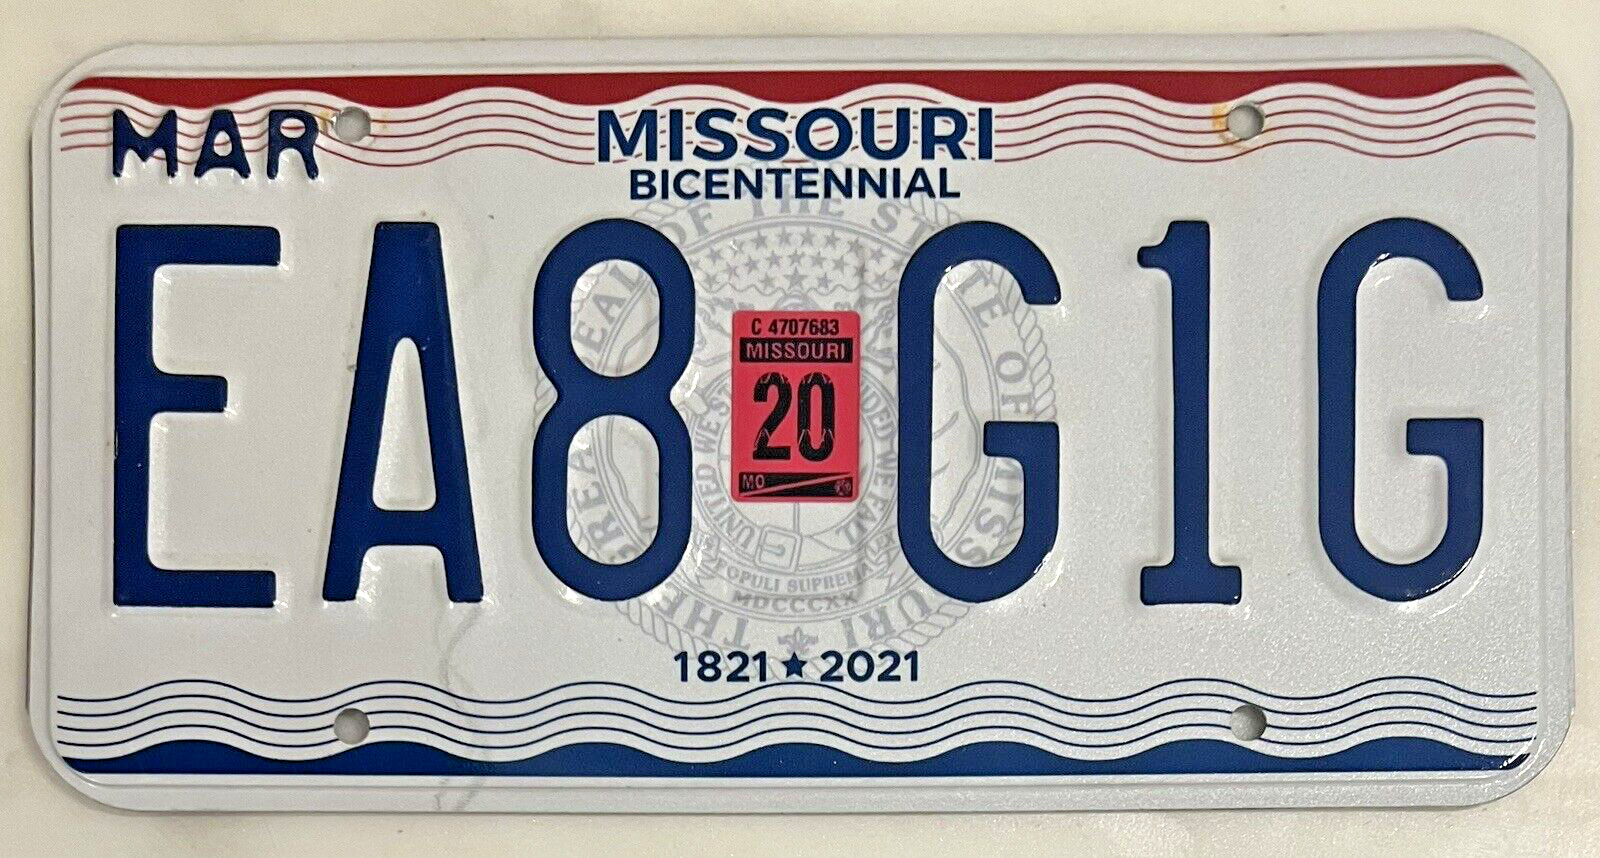 Missouri Bicentennial 1821-2021 Automobile License Plate - RANDOM SELECTION